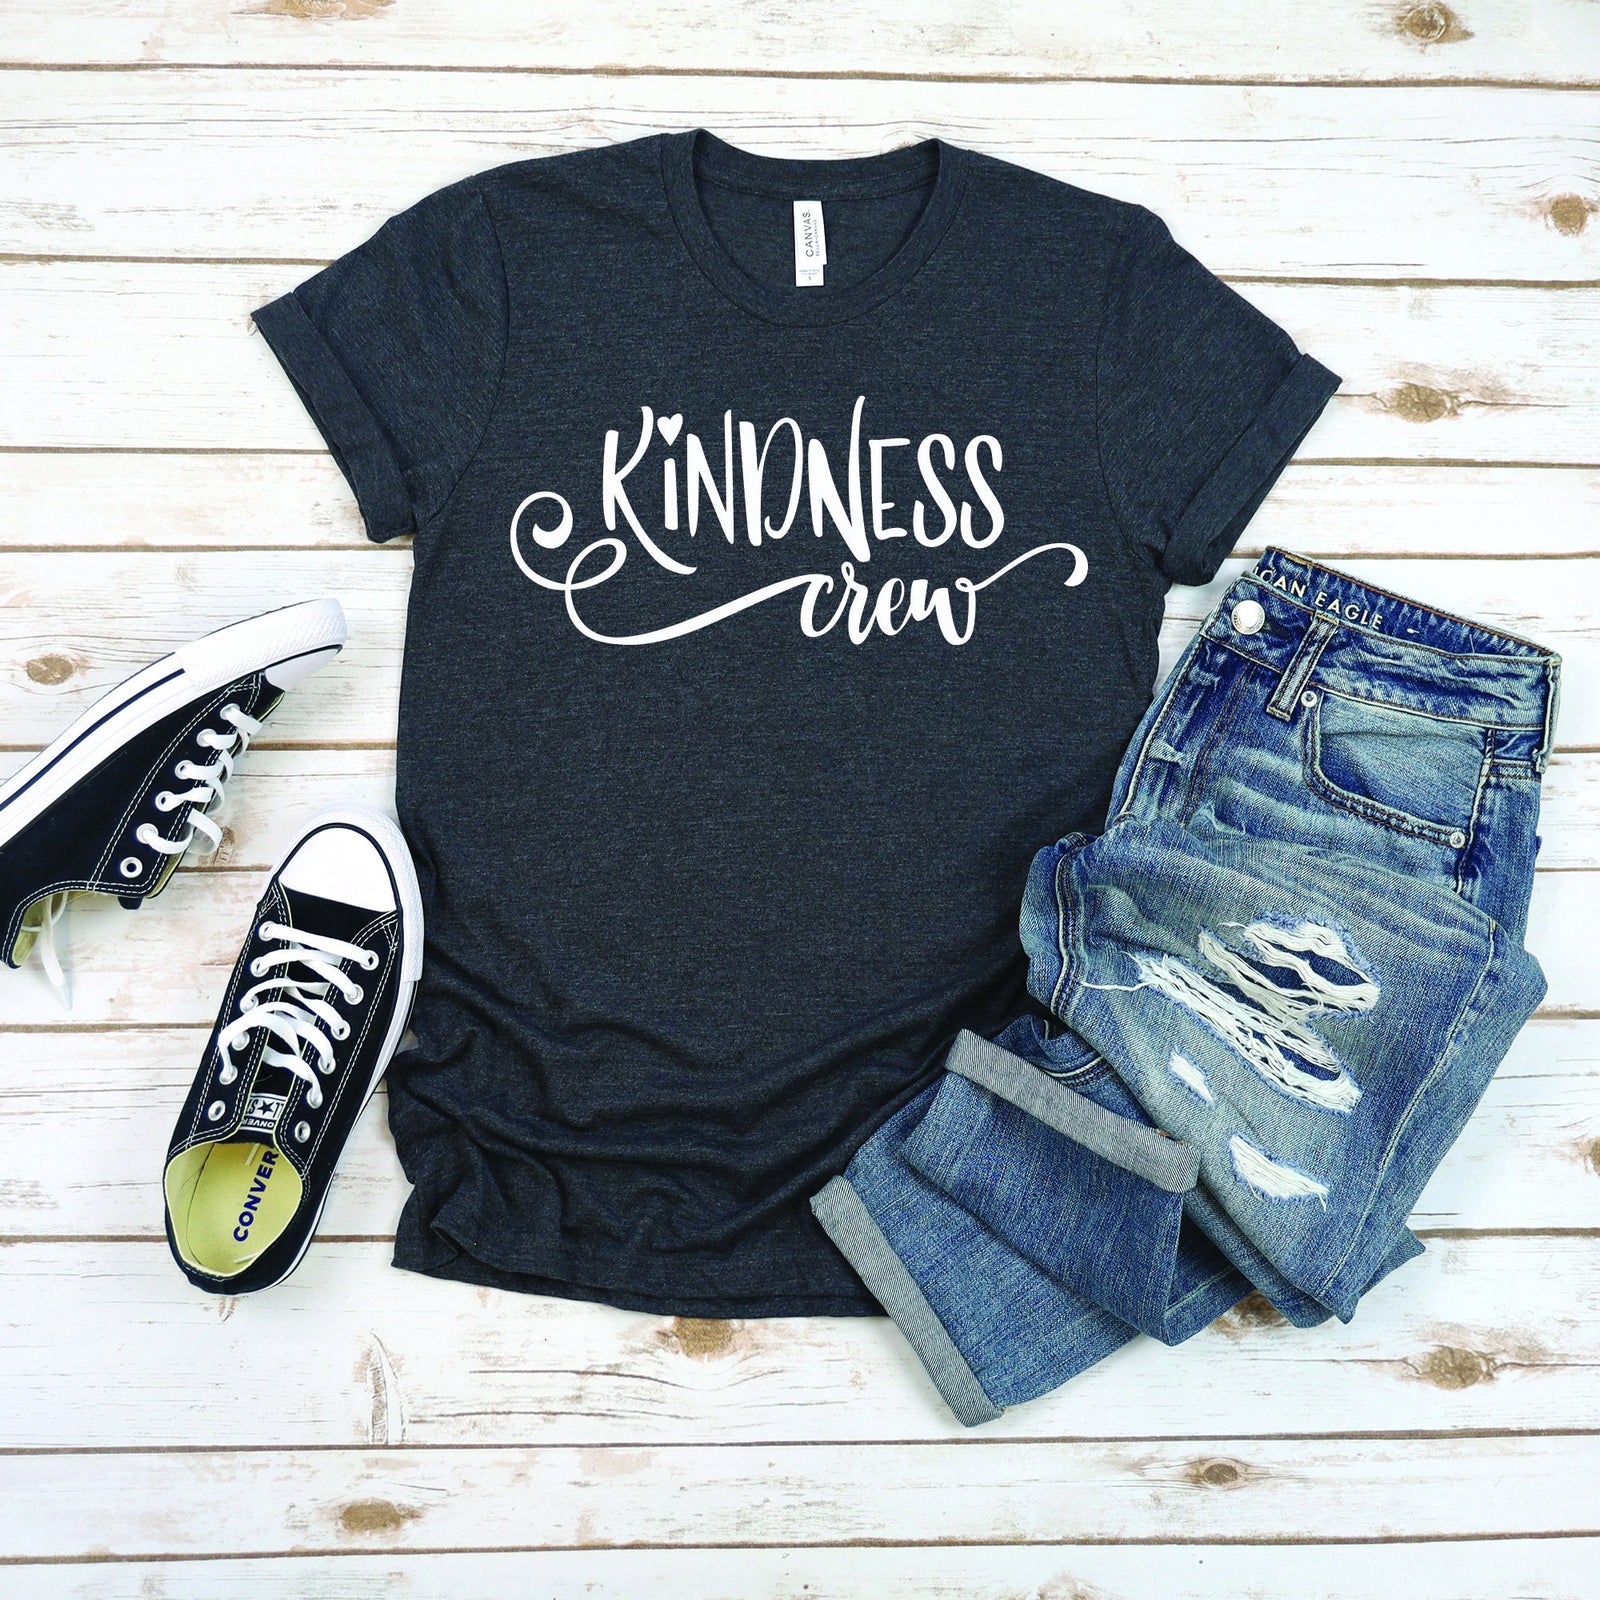 Kindness Crew T Shirt - Teacher Shirts - Spectrum - SPED Shirt - Autism Awareness - Counselor